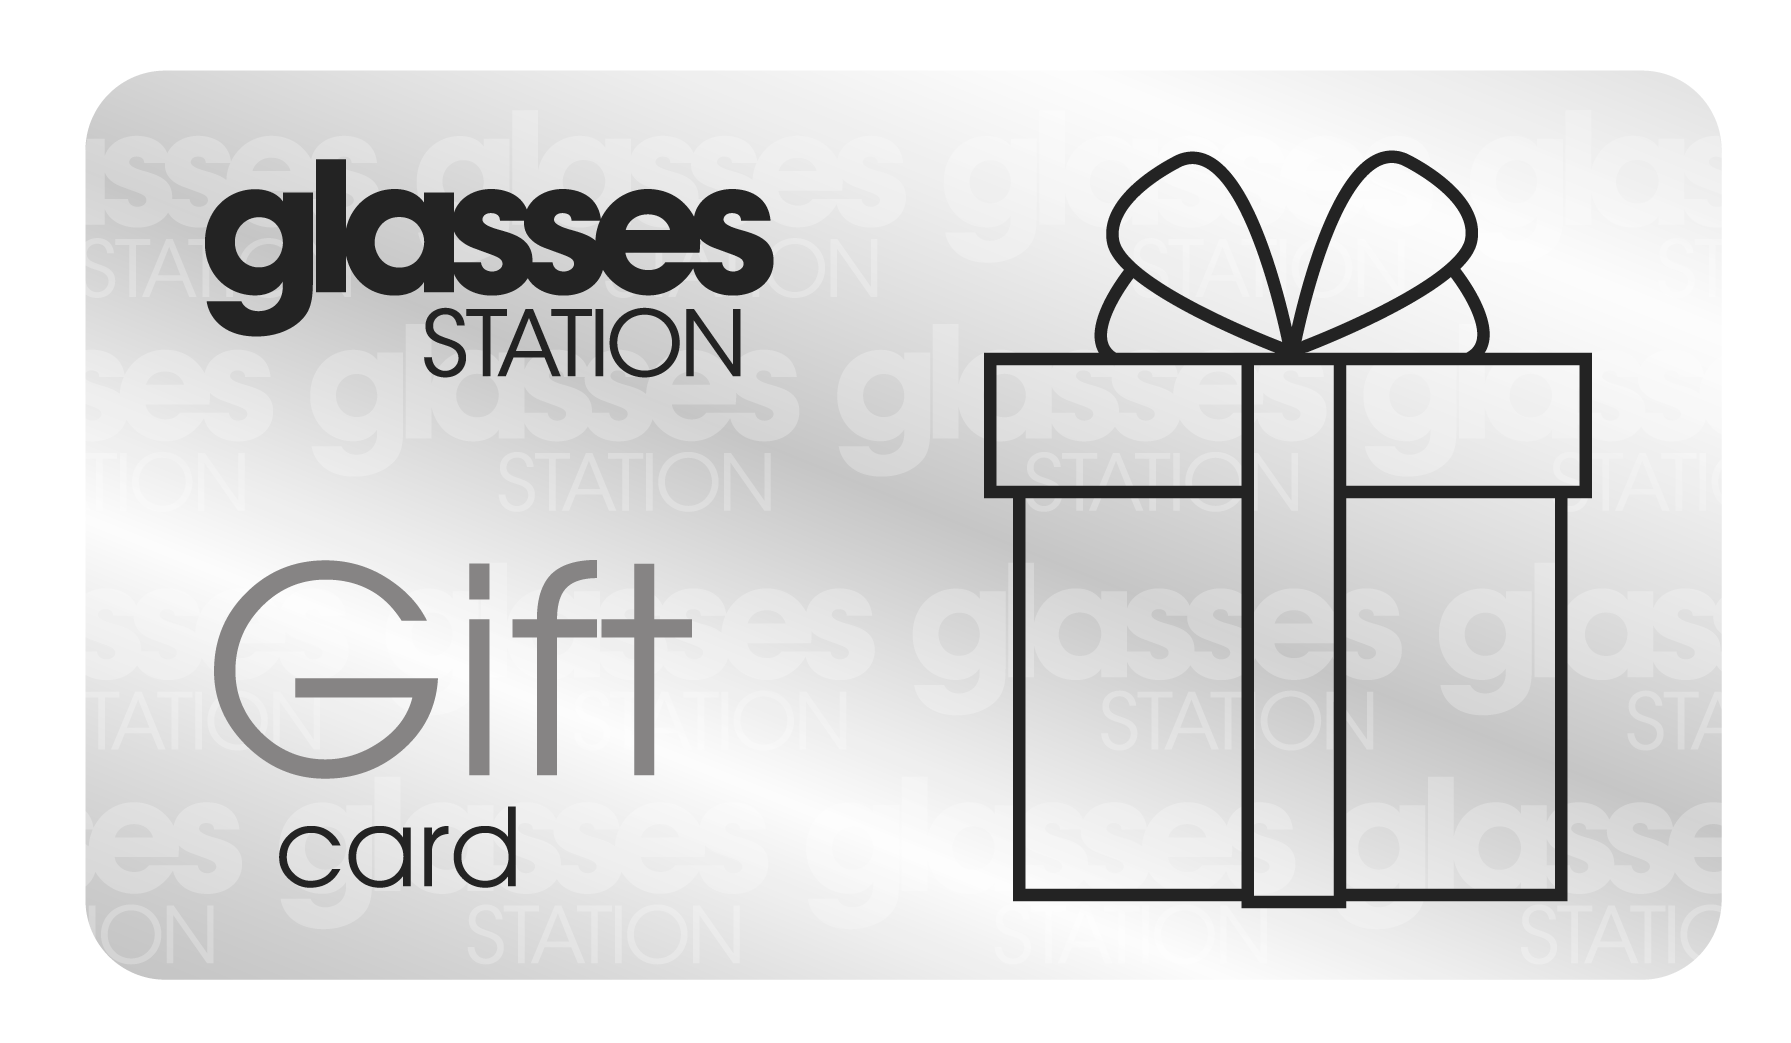 Sunglasses E-Gift Card, Online Gift Certificate